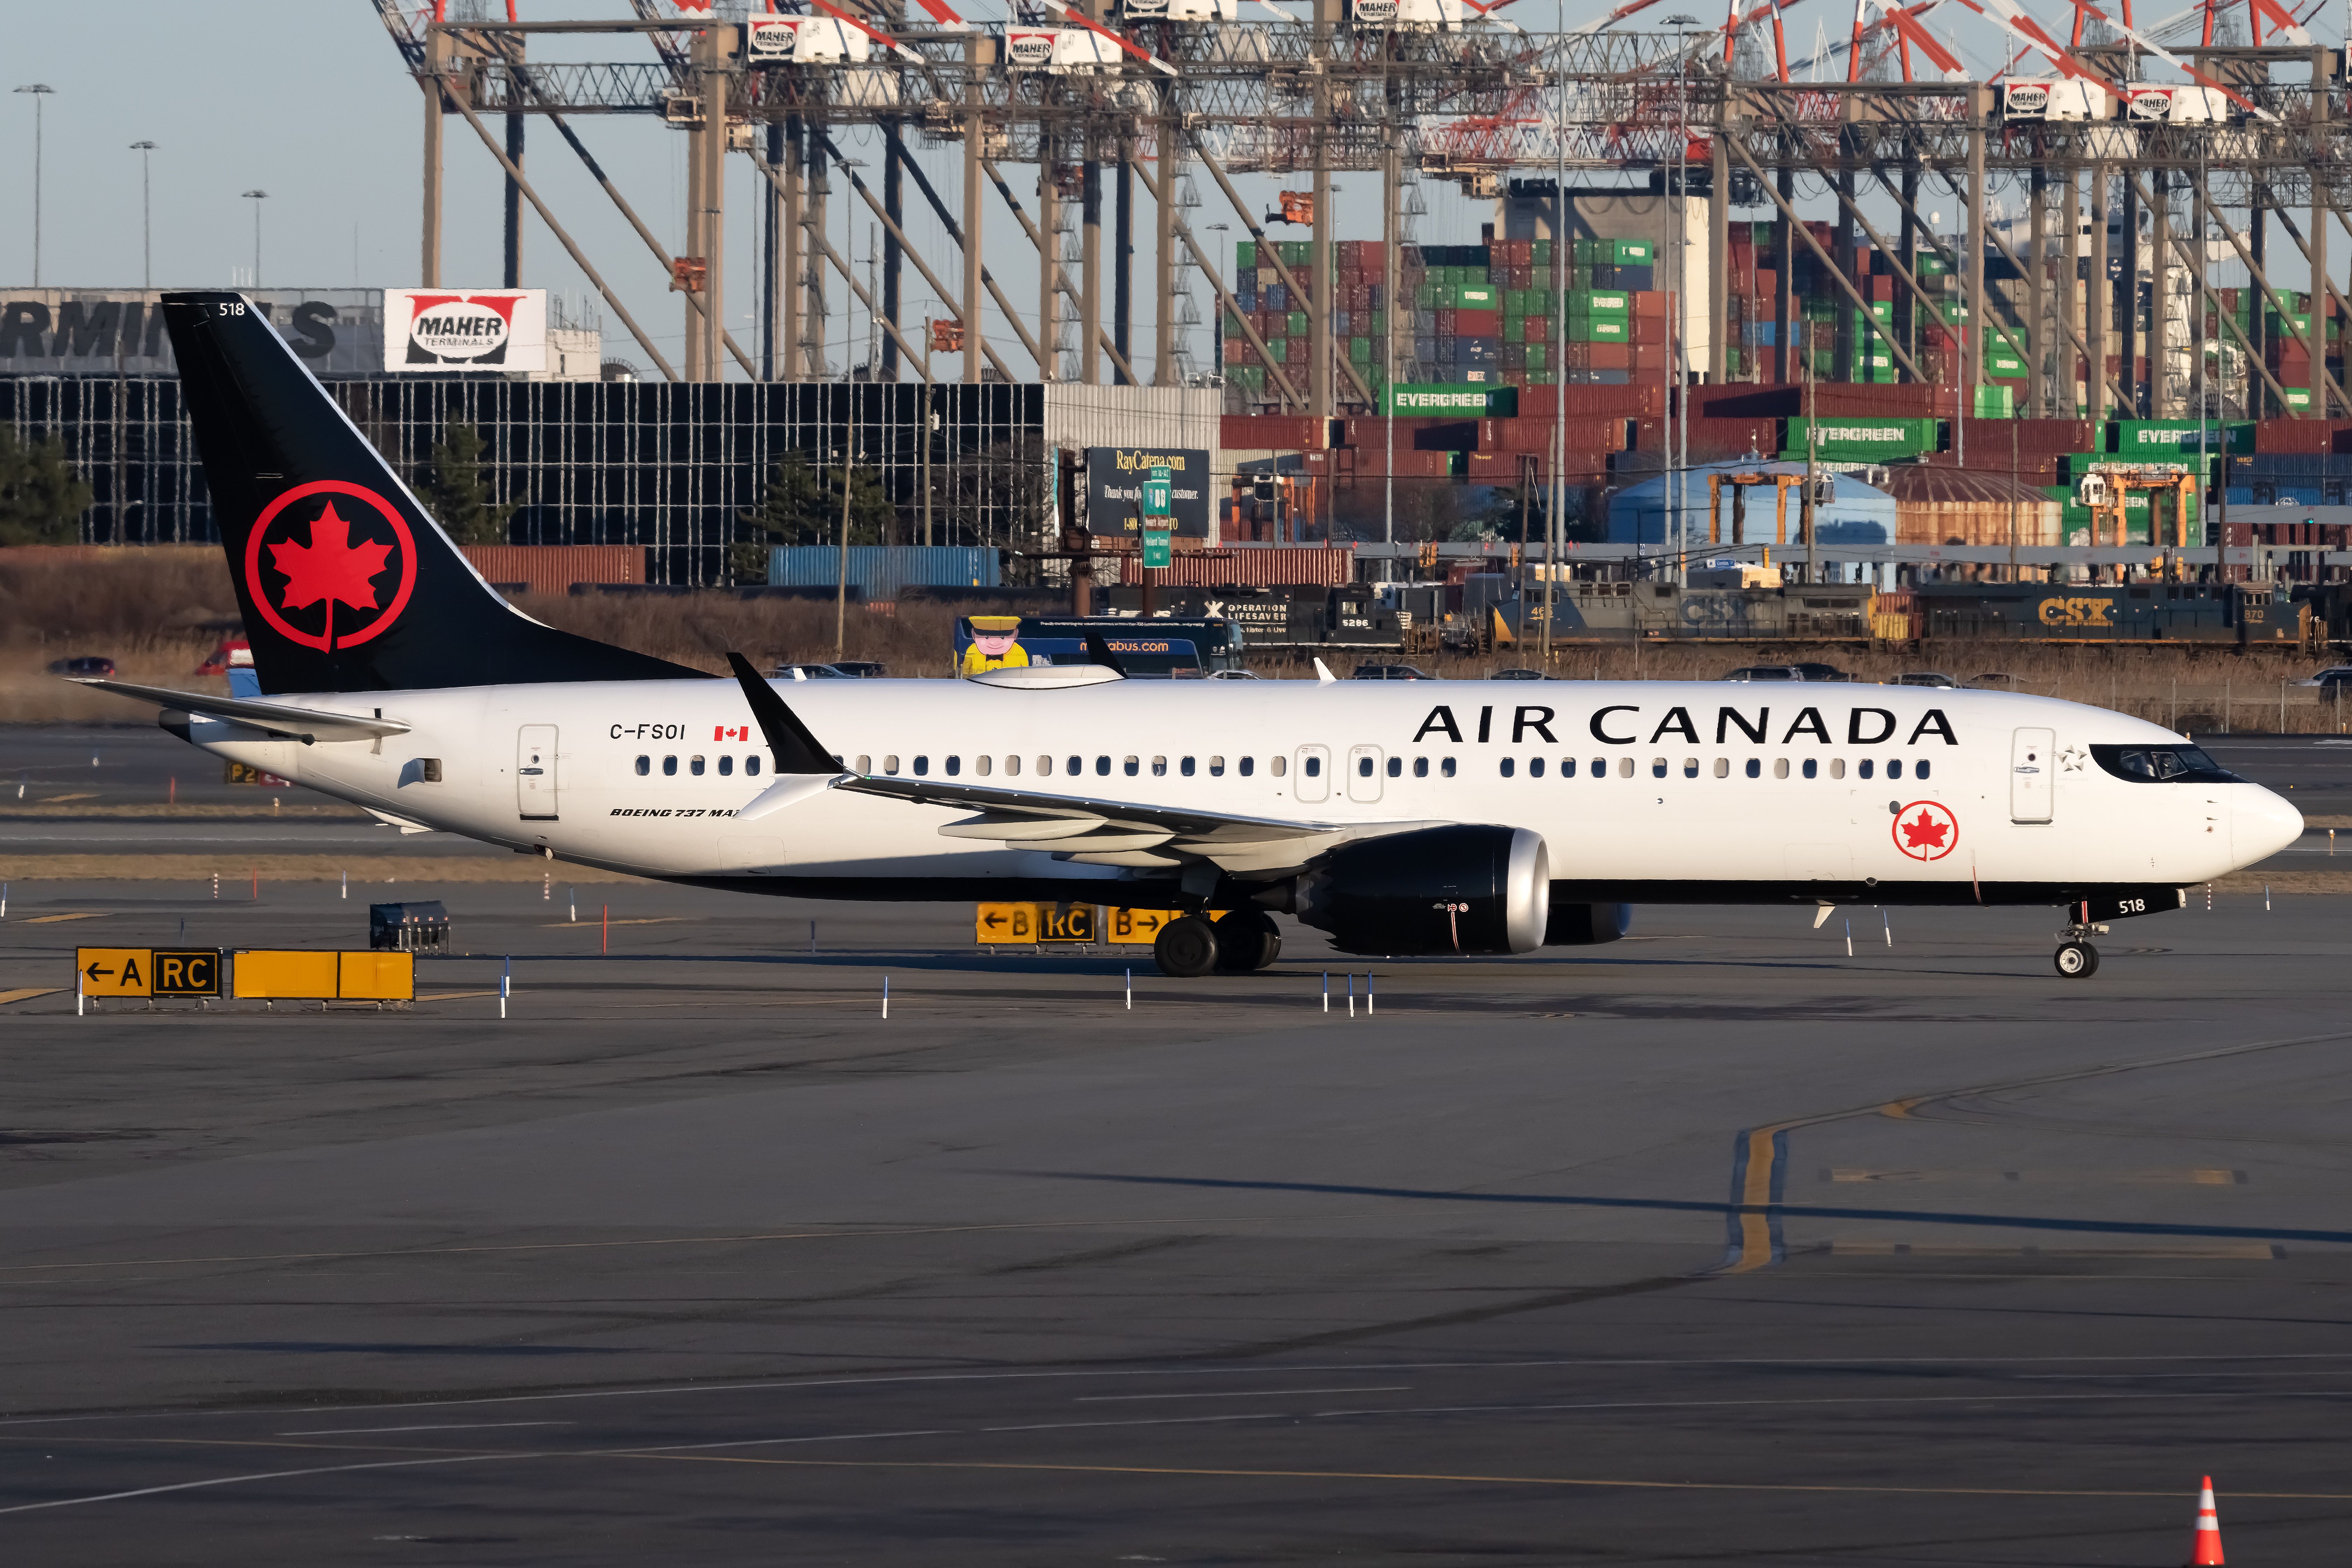 Air Canada B737 MAX8 on ground